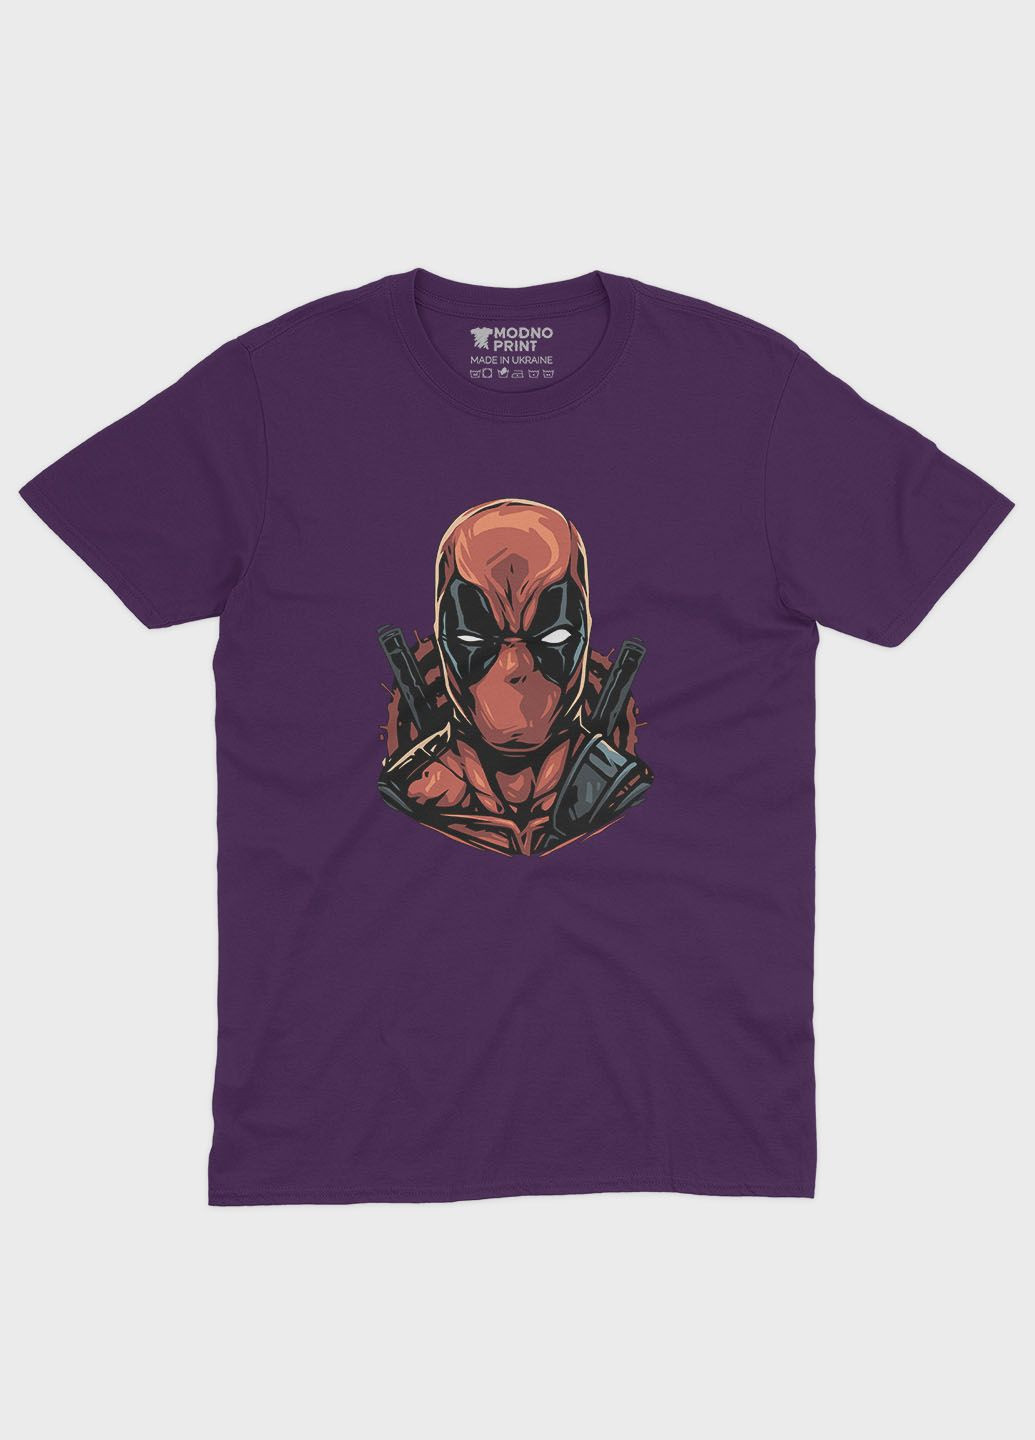 Фиолетовая демисезонная футболка для мальчика с принтом антигероя - дедпул (ts001-1-dby-006-015-031-b) Modno